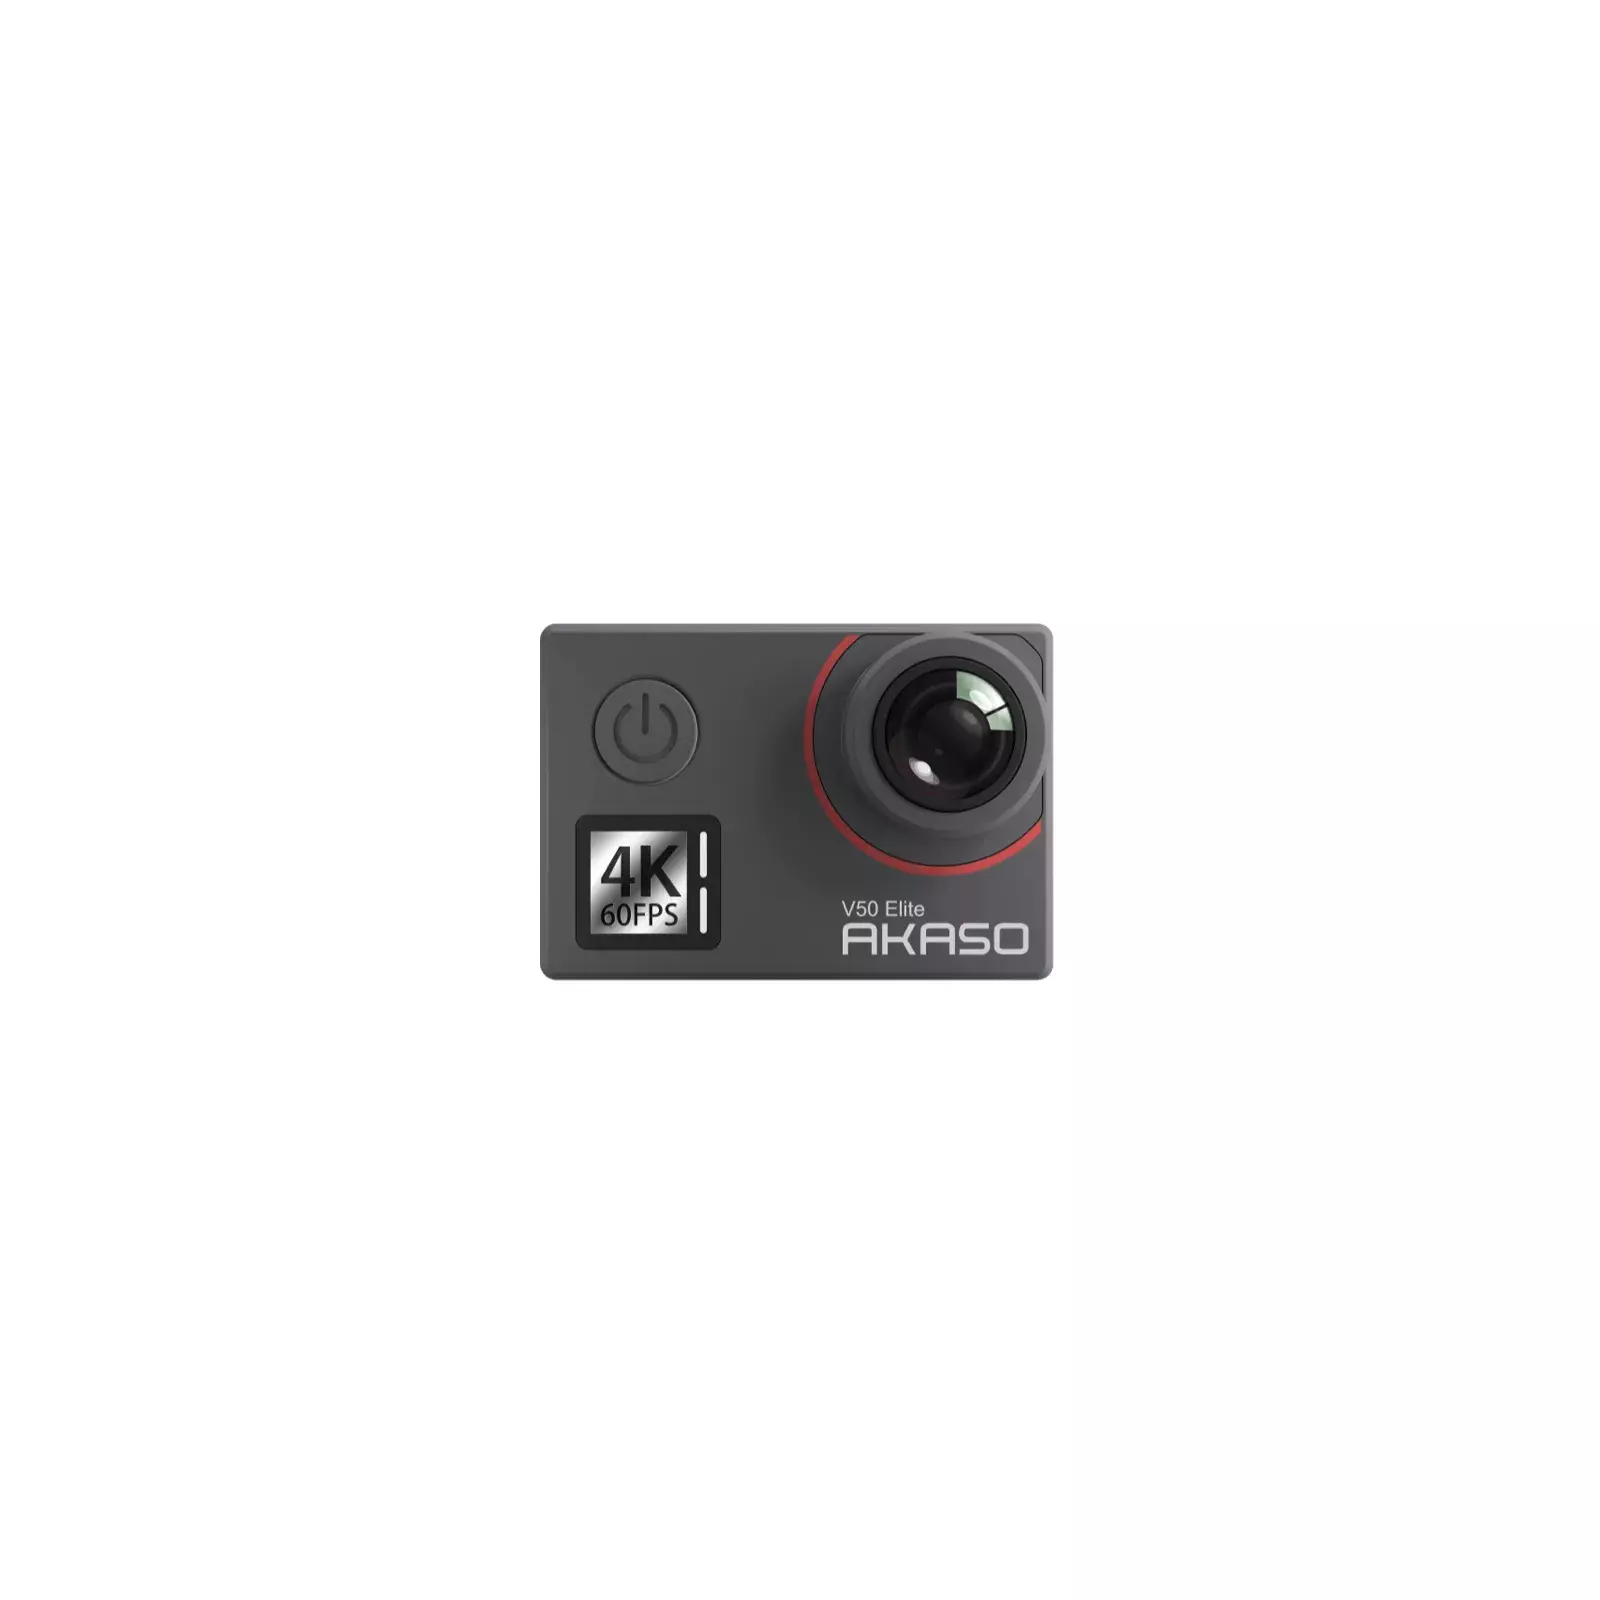 AKASO V50 Elite 4K/60FPS Action Camera with highest Frame Rates